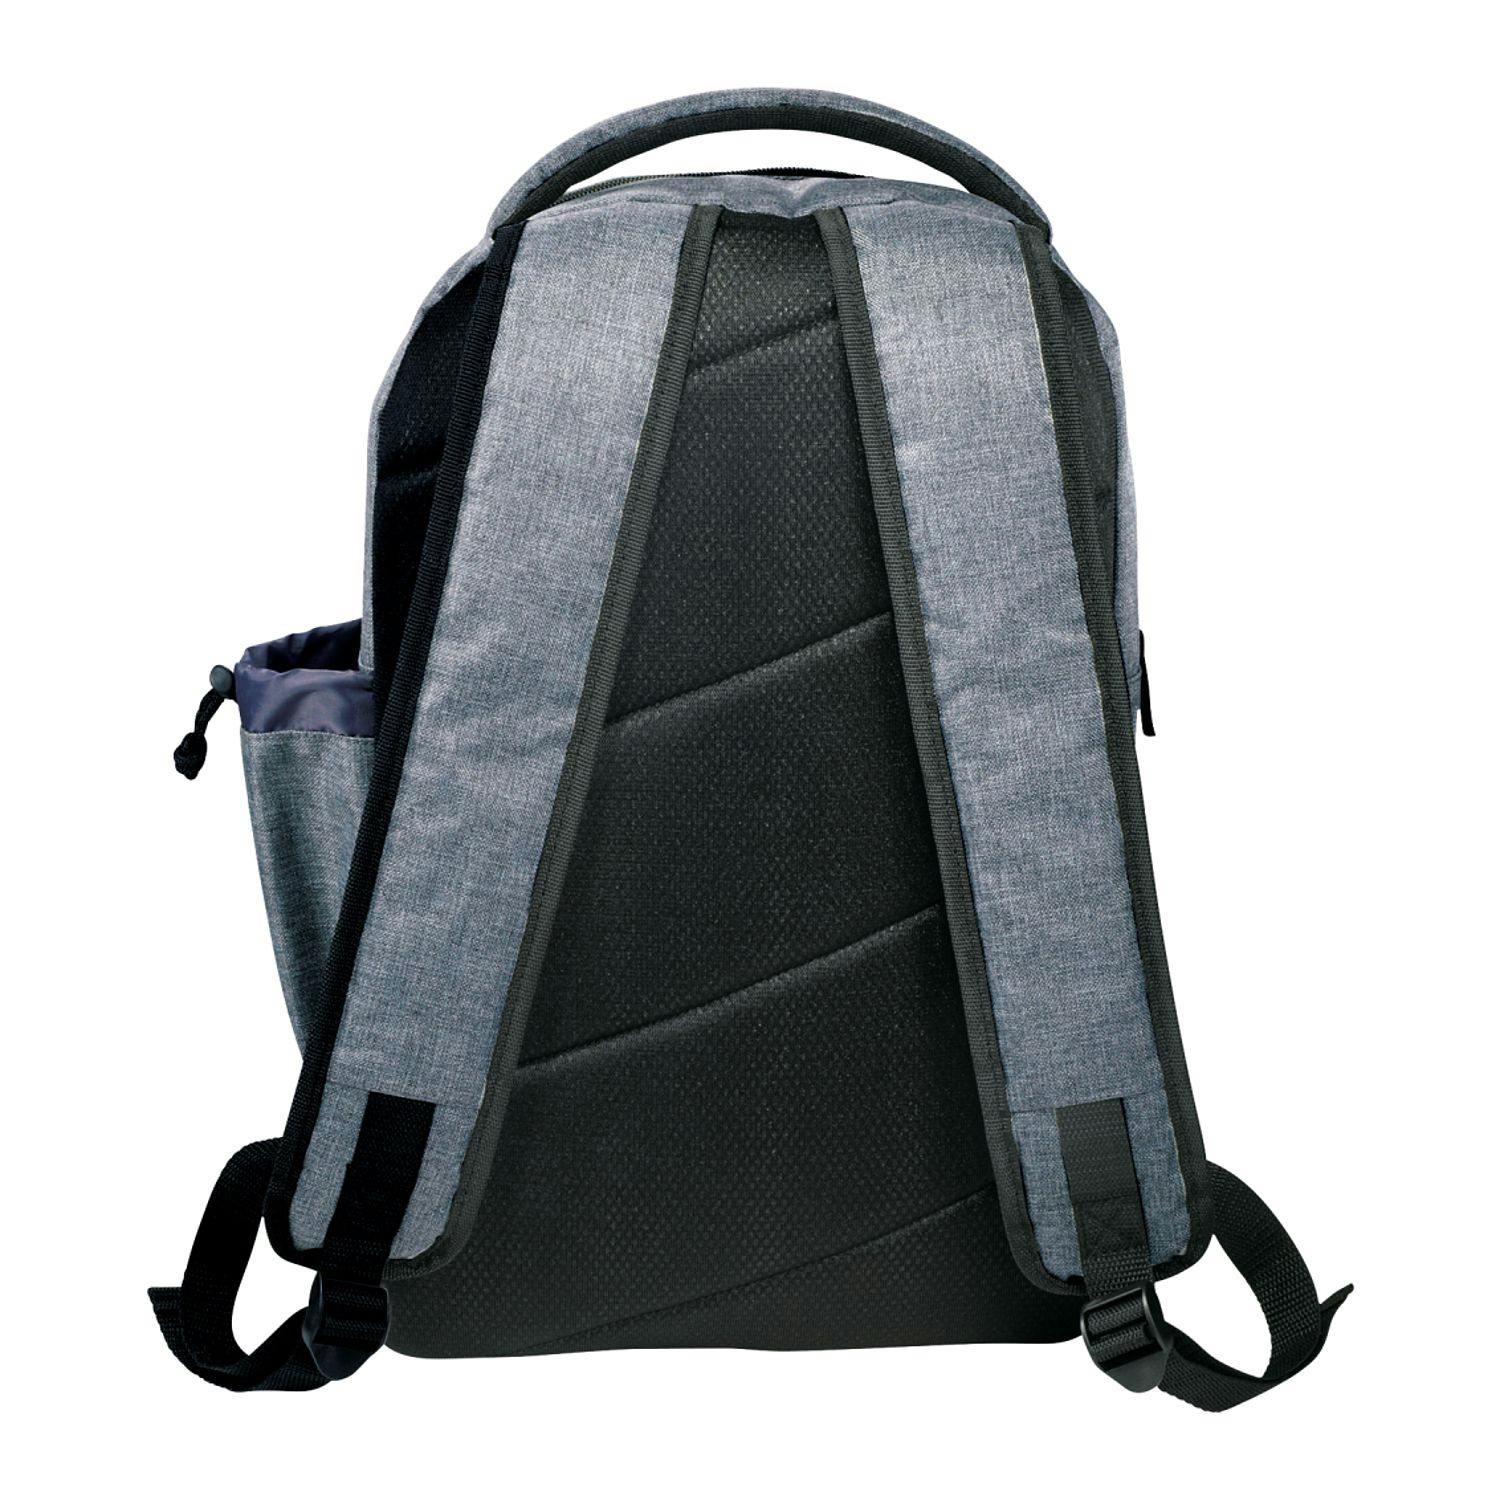 Graphite Slim 15" Computer Backpack - additional Image 2